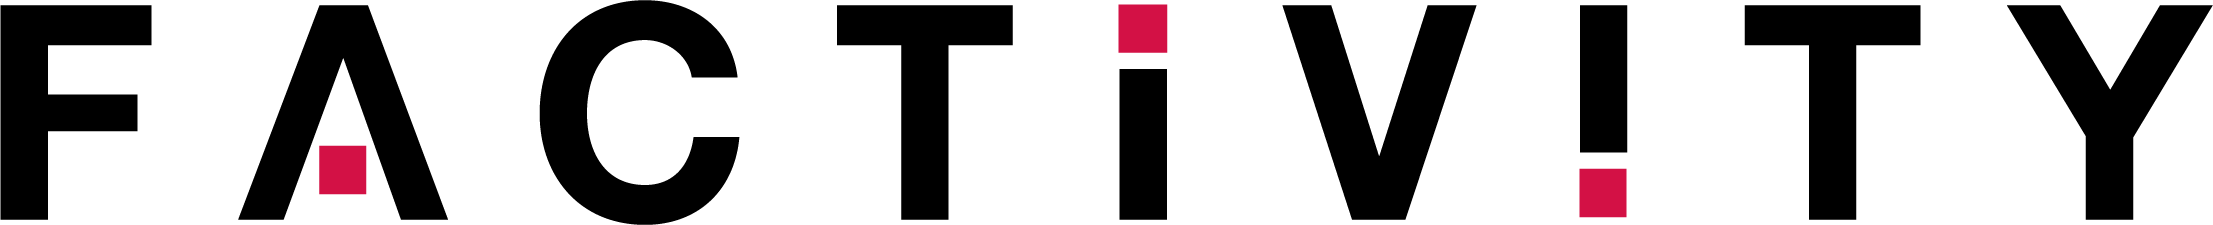 Factivity-AI-logo